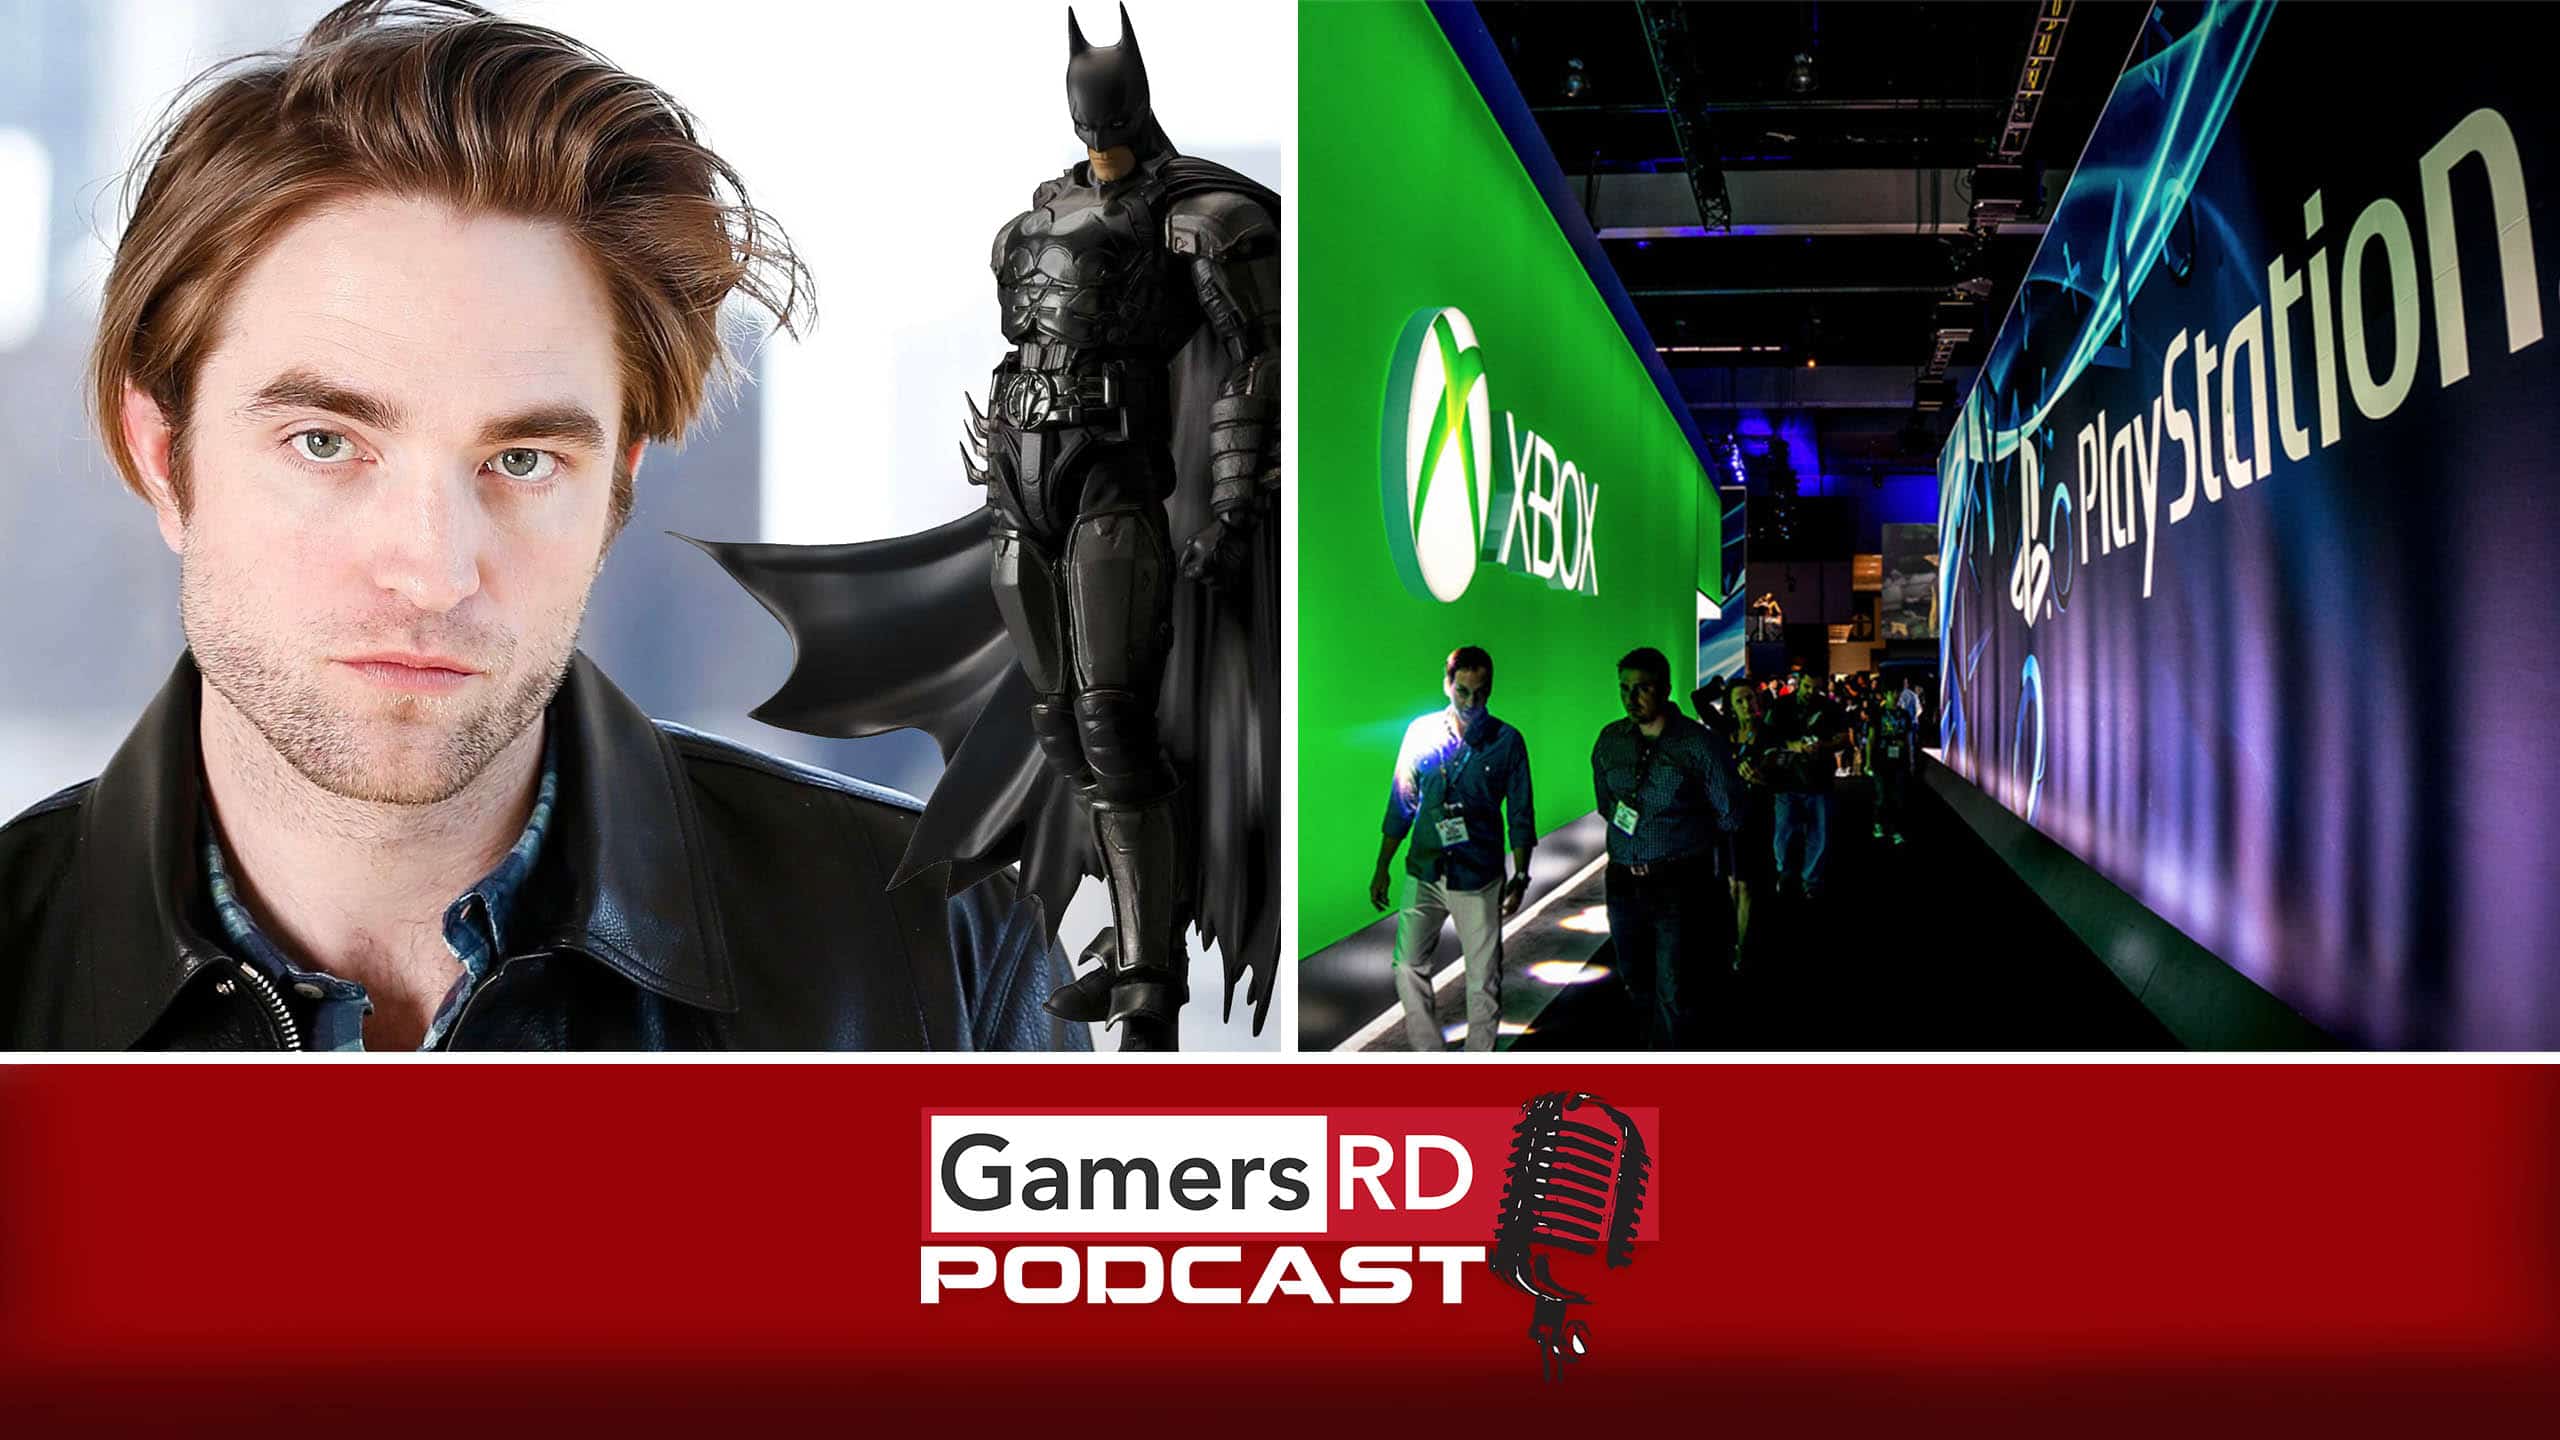 GamersRD Podcast #68, robert pattinson, Microsoft, Xbox, Sony, Playstation,1